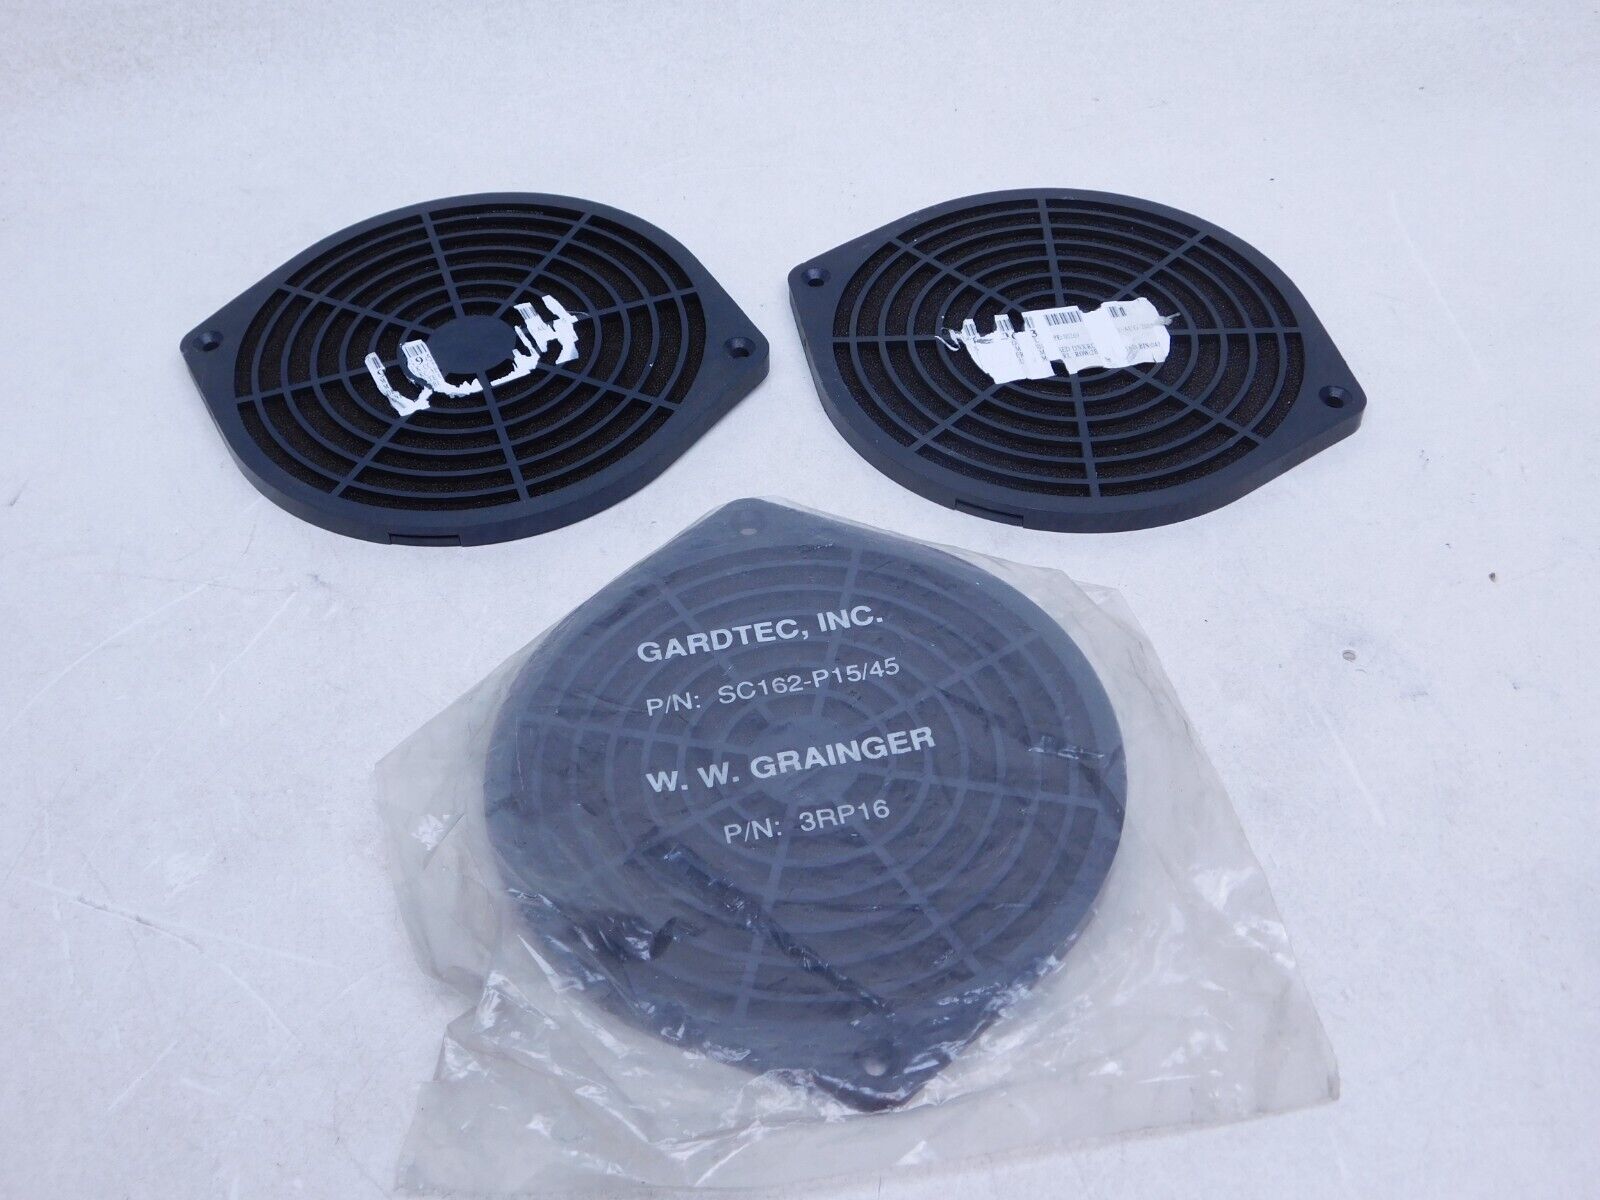 LOT OF 3 - NOS Gardtec SC162-P15/45 SC162P15/45 Fan Filter Guard  (HR)